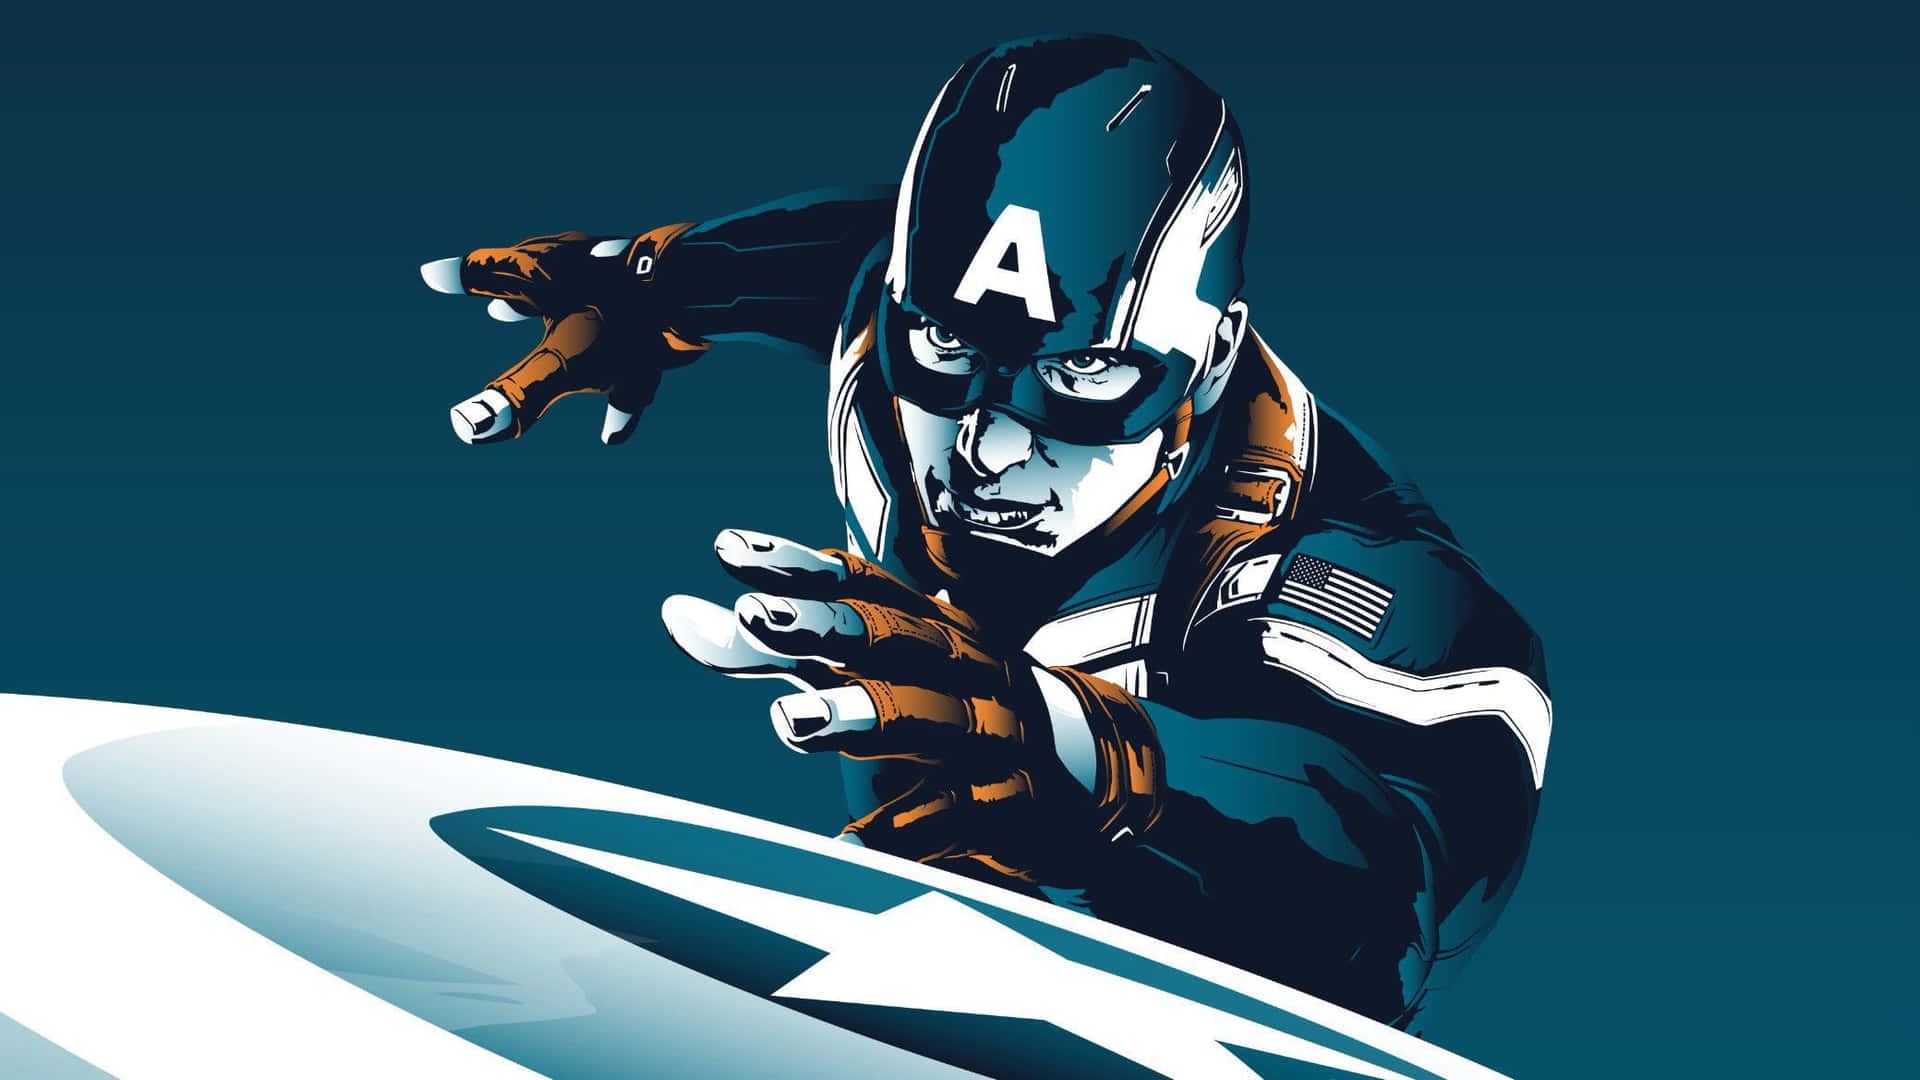 Retro Captain America - A Classic Avengers Superhero Wallpaper